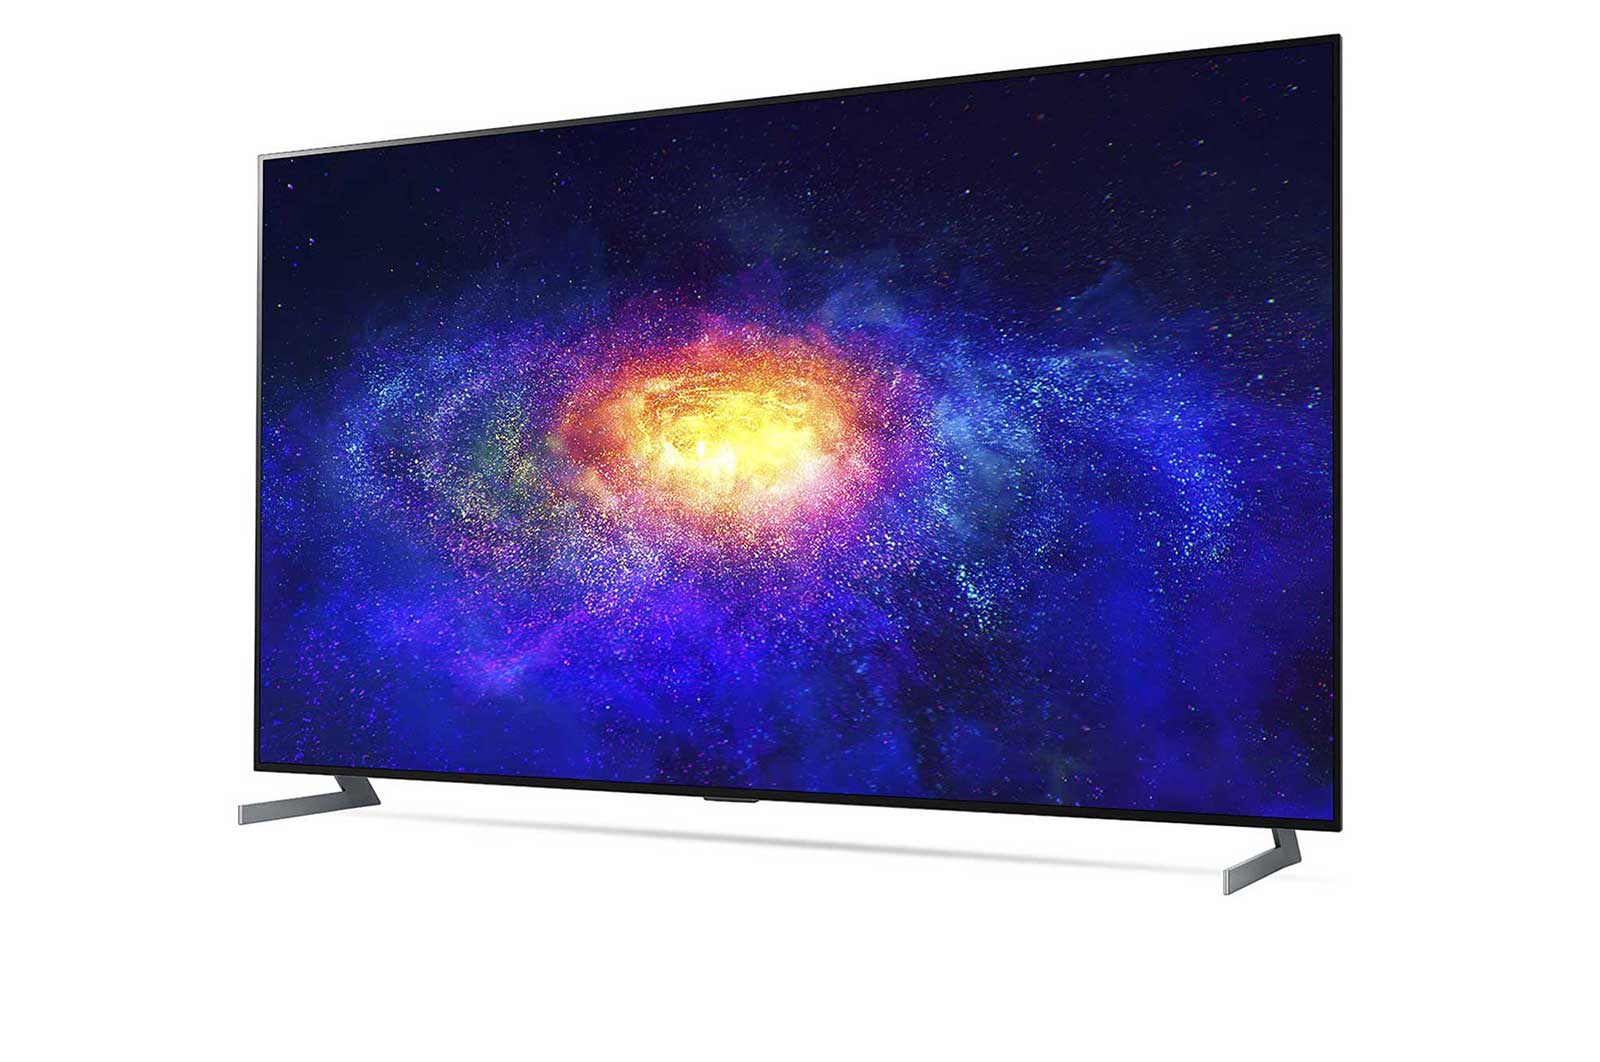 LG OLED TV 77 Inch 8K Cinema HDR With Gallery Design | LG UAE